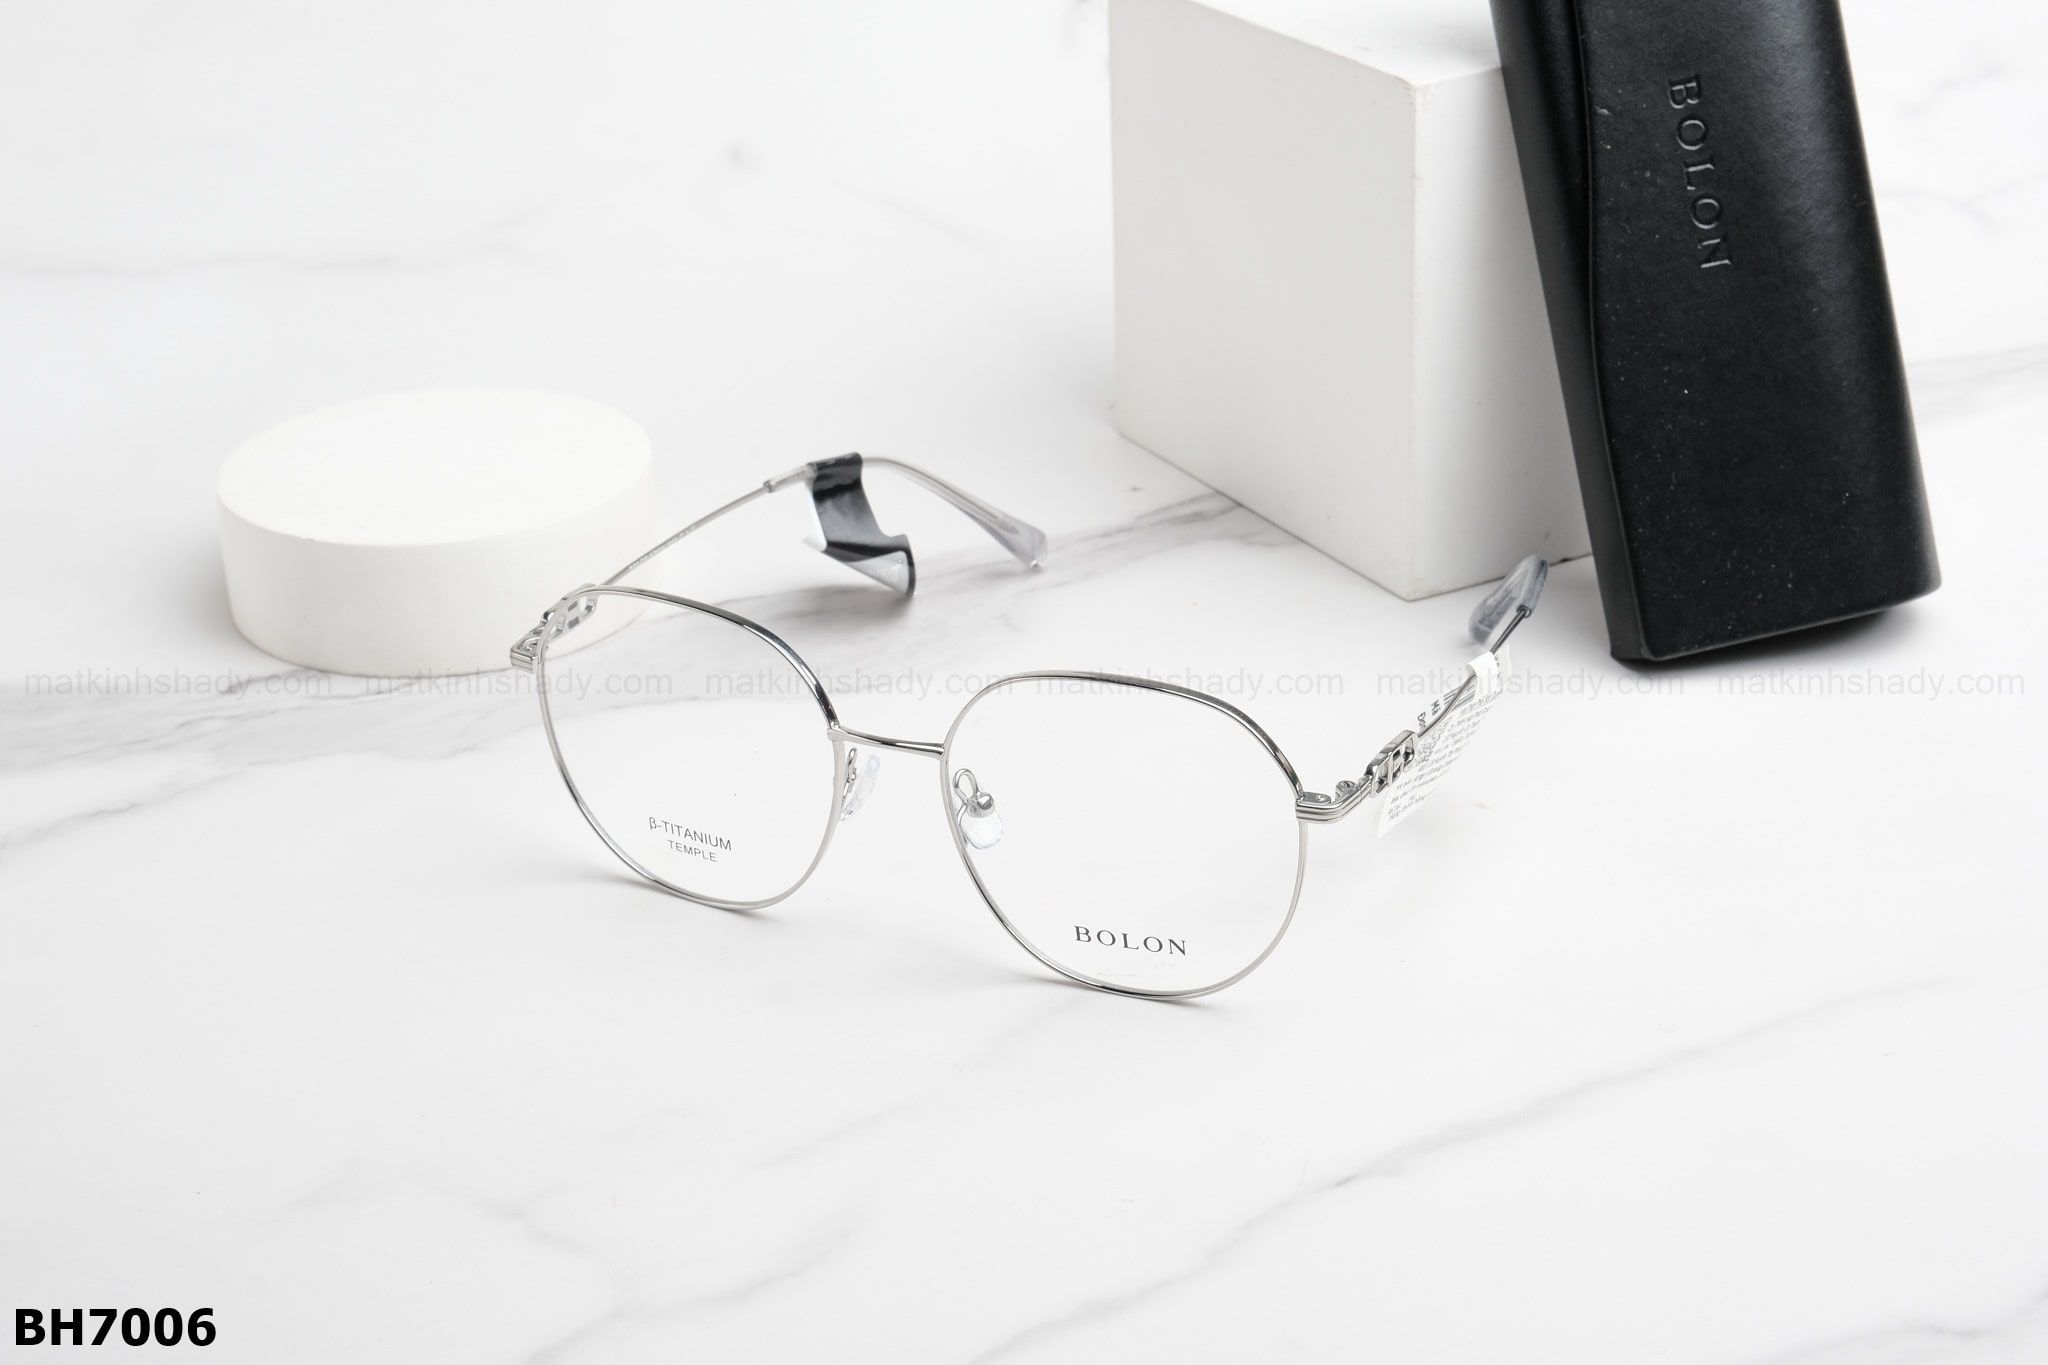  Bolon Eyewear - Glasses - BH7006 